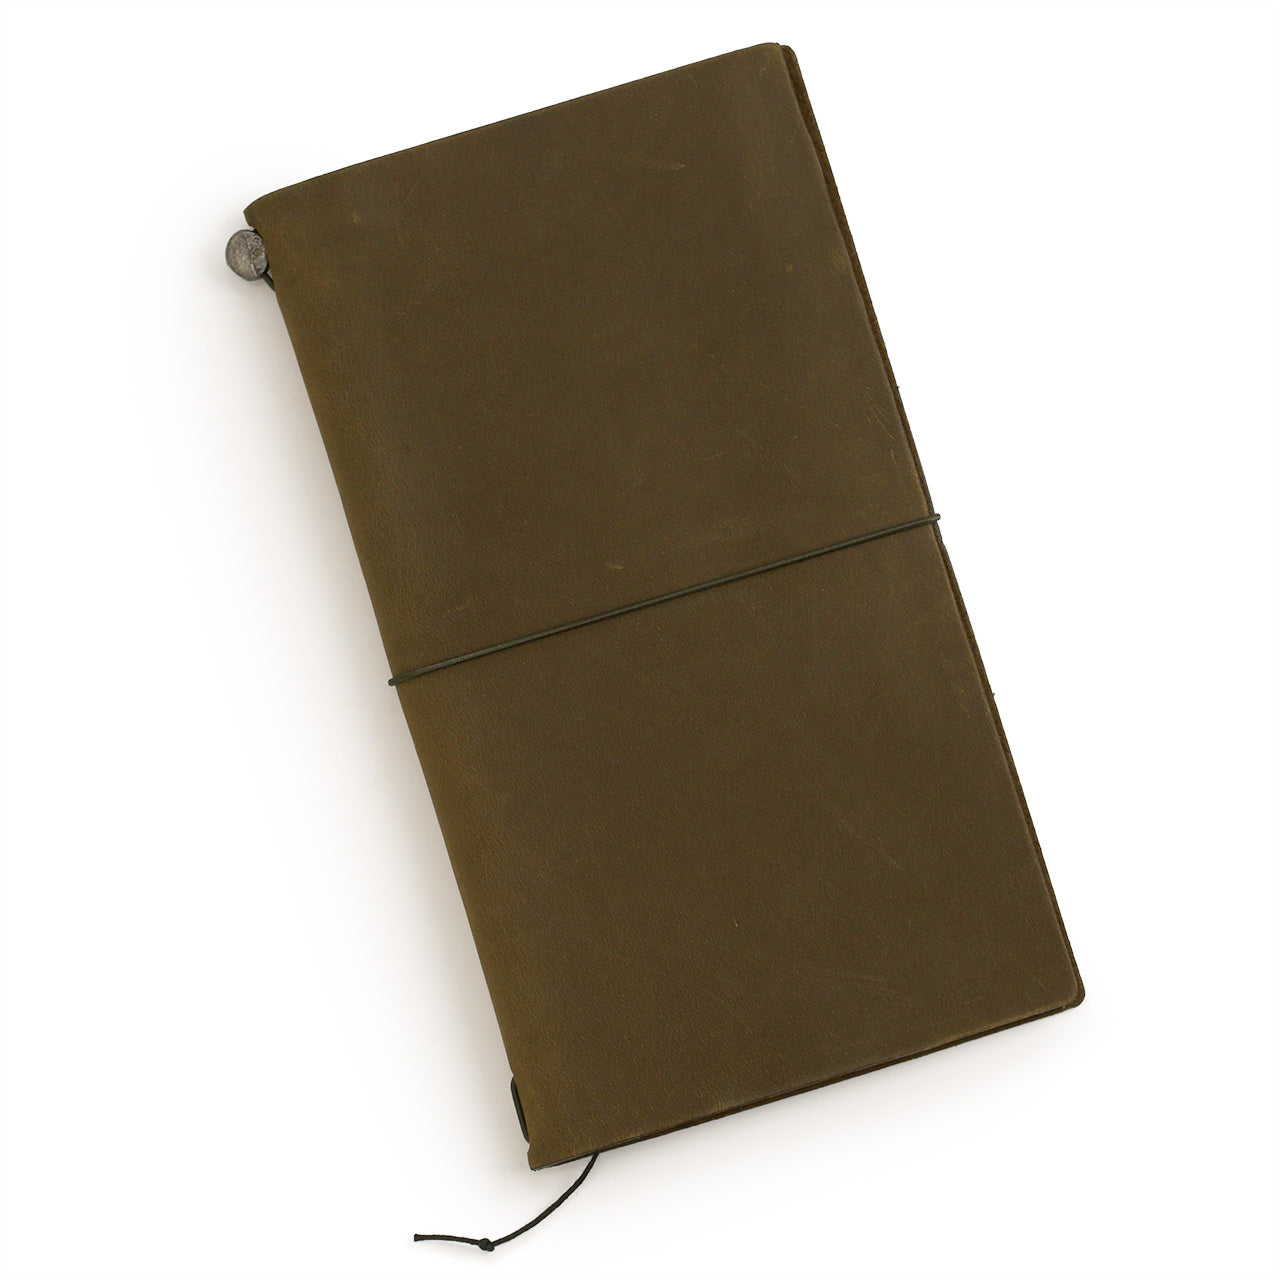 Olive traveler's notebook in regular size